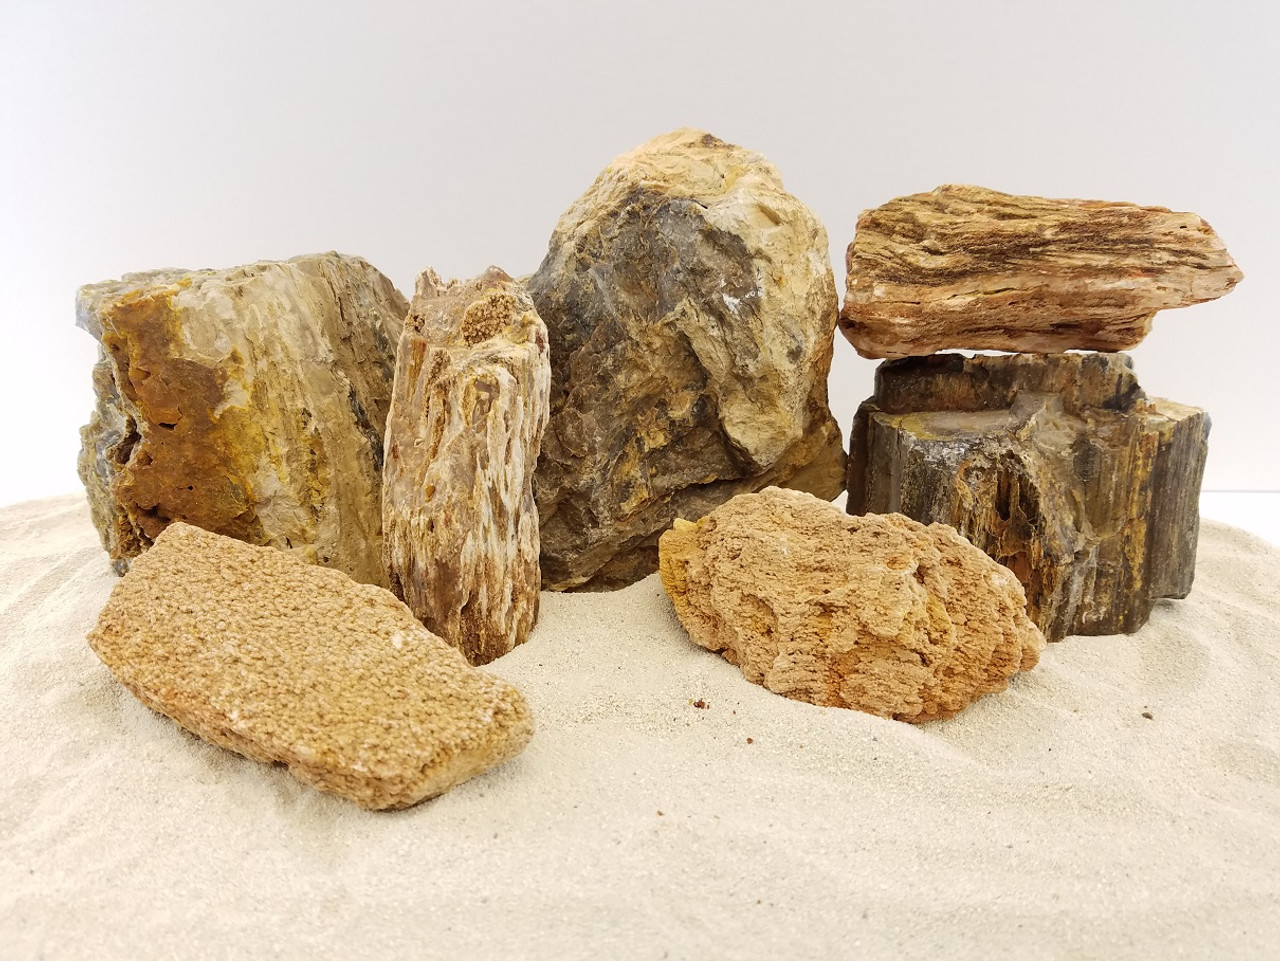 Lifegard Canyon Petrified Stone - 15 Lbs Mix Size Kit of Medium and Small Rocks